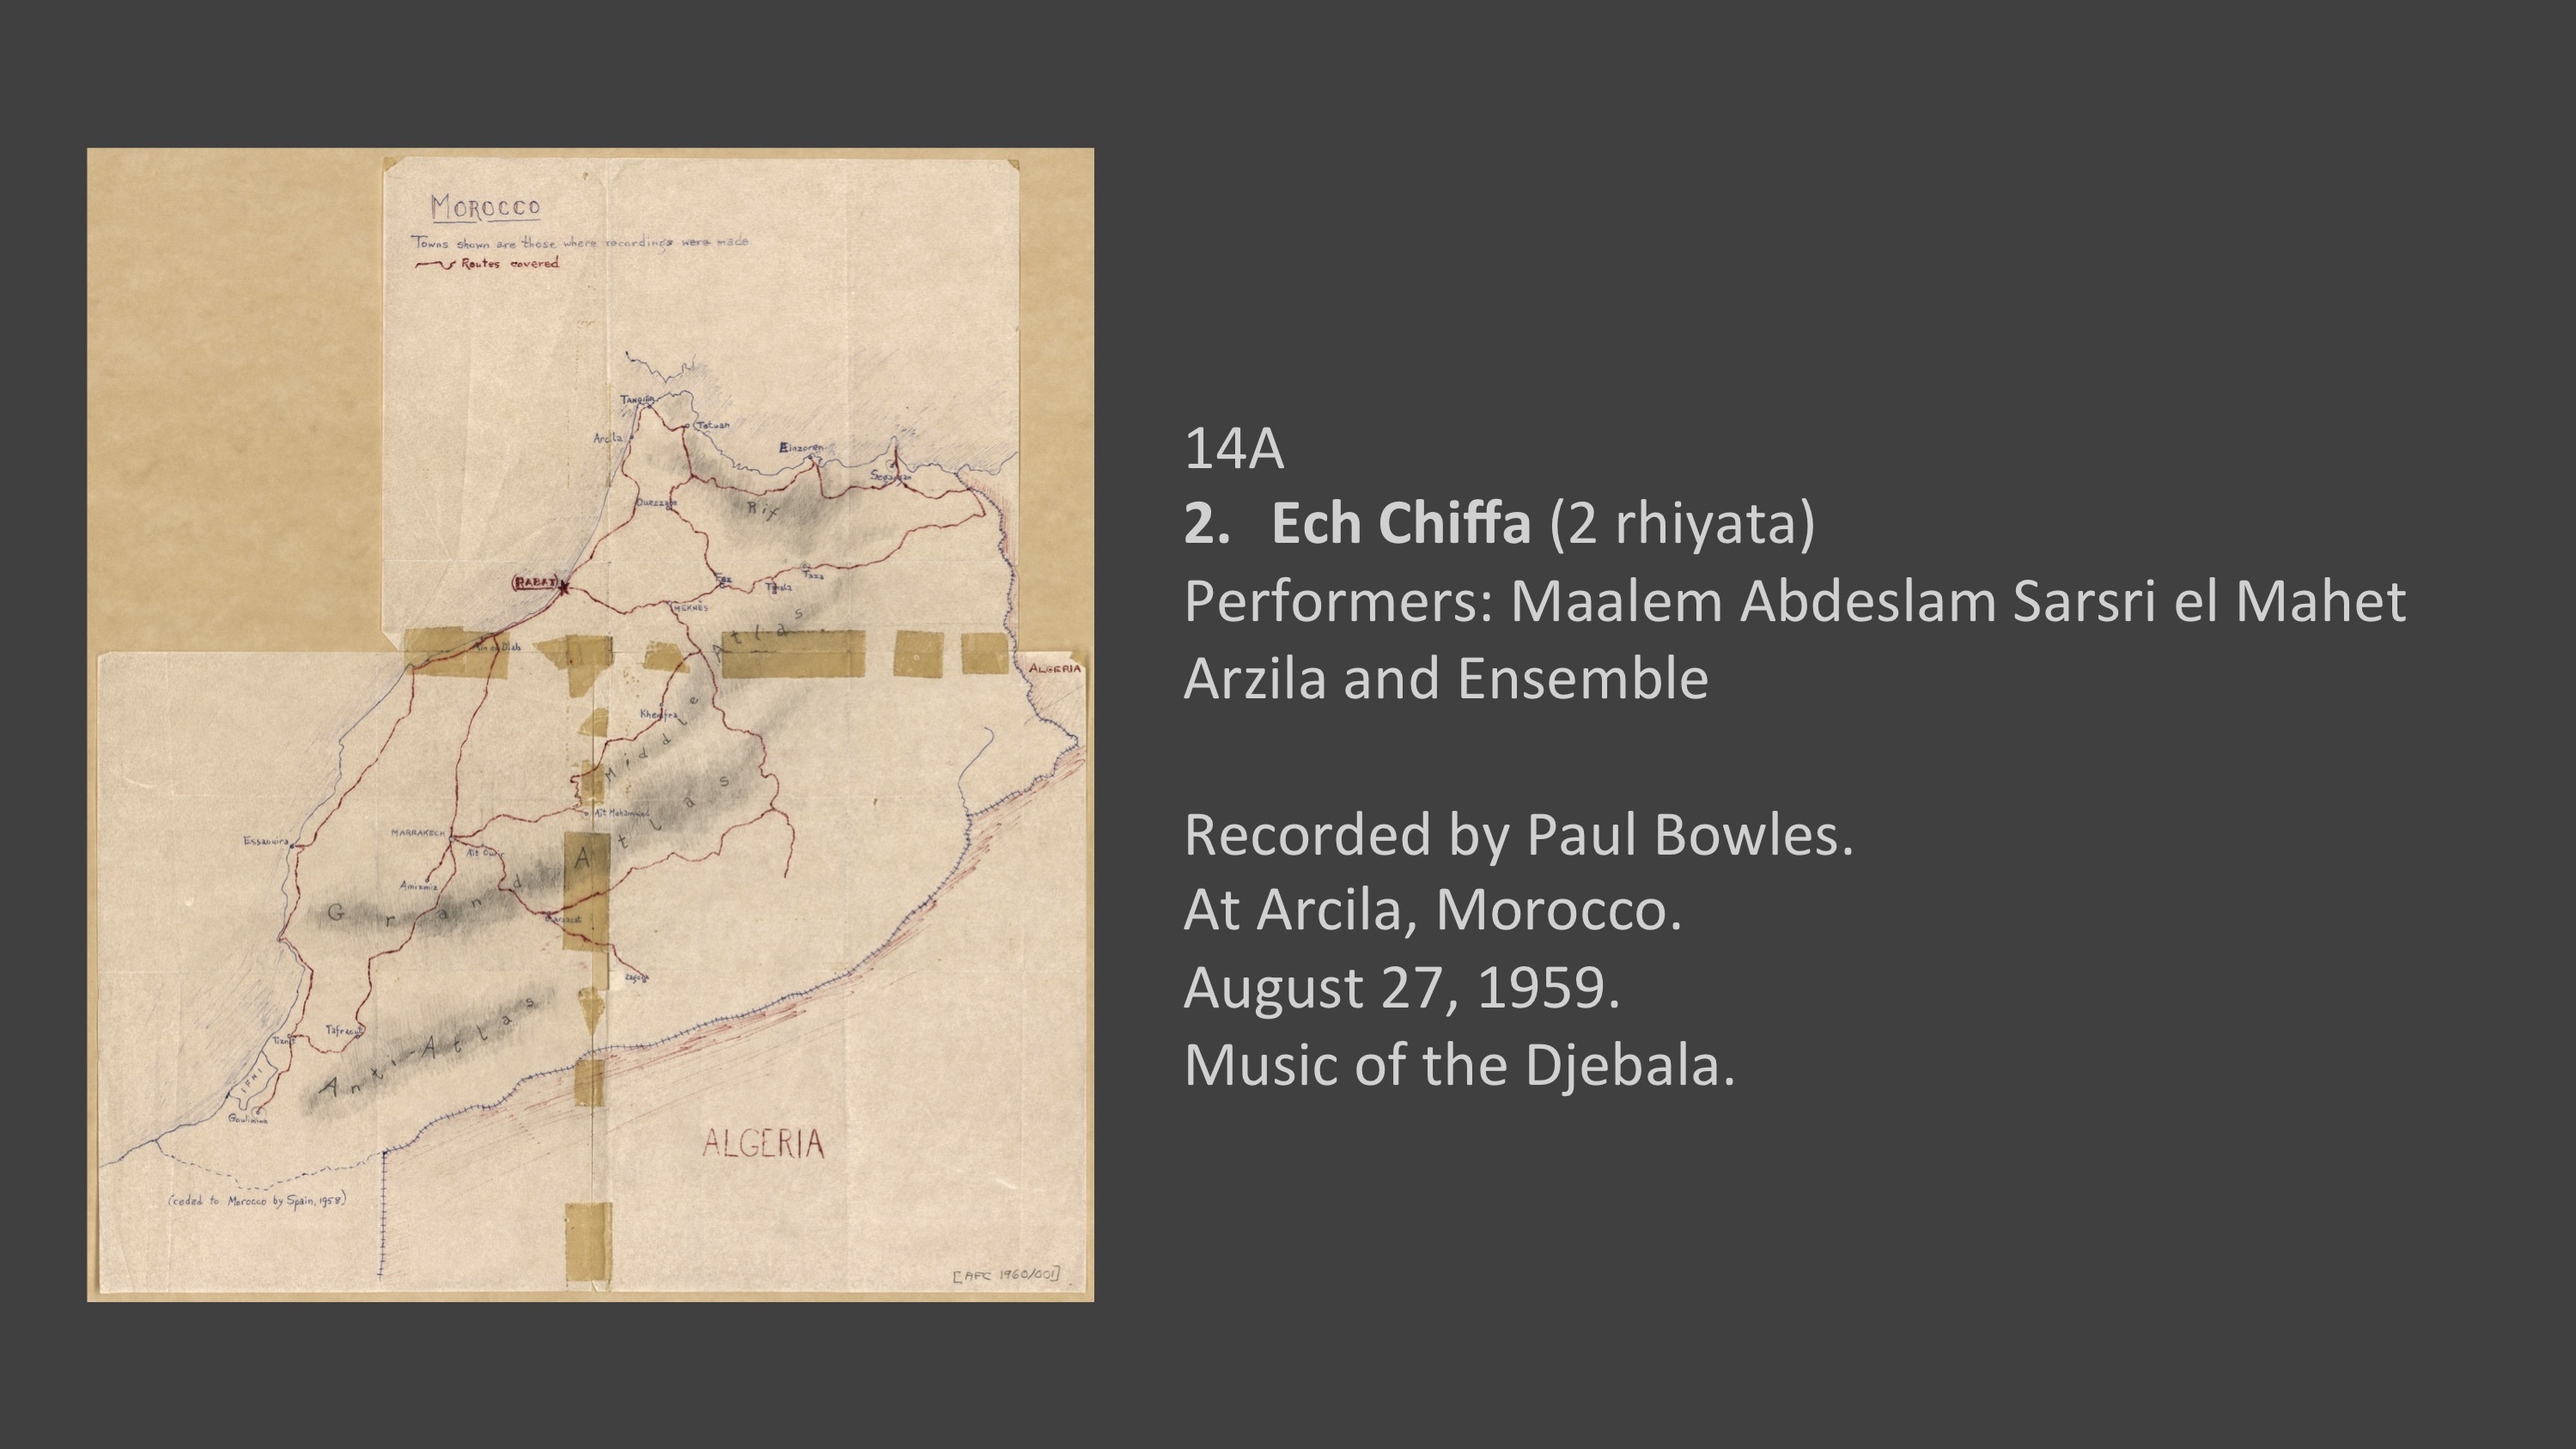 14a - 2 Ech Chiffa (2 rhayitas)
Performers: Maalem Abdeslam Sarsri el Mahet Arzila and Ensemble